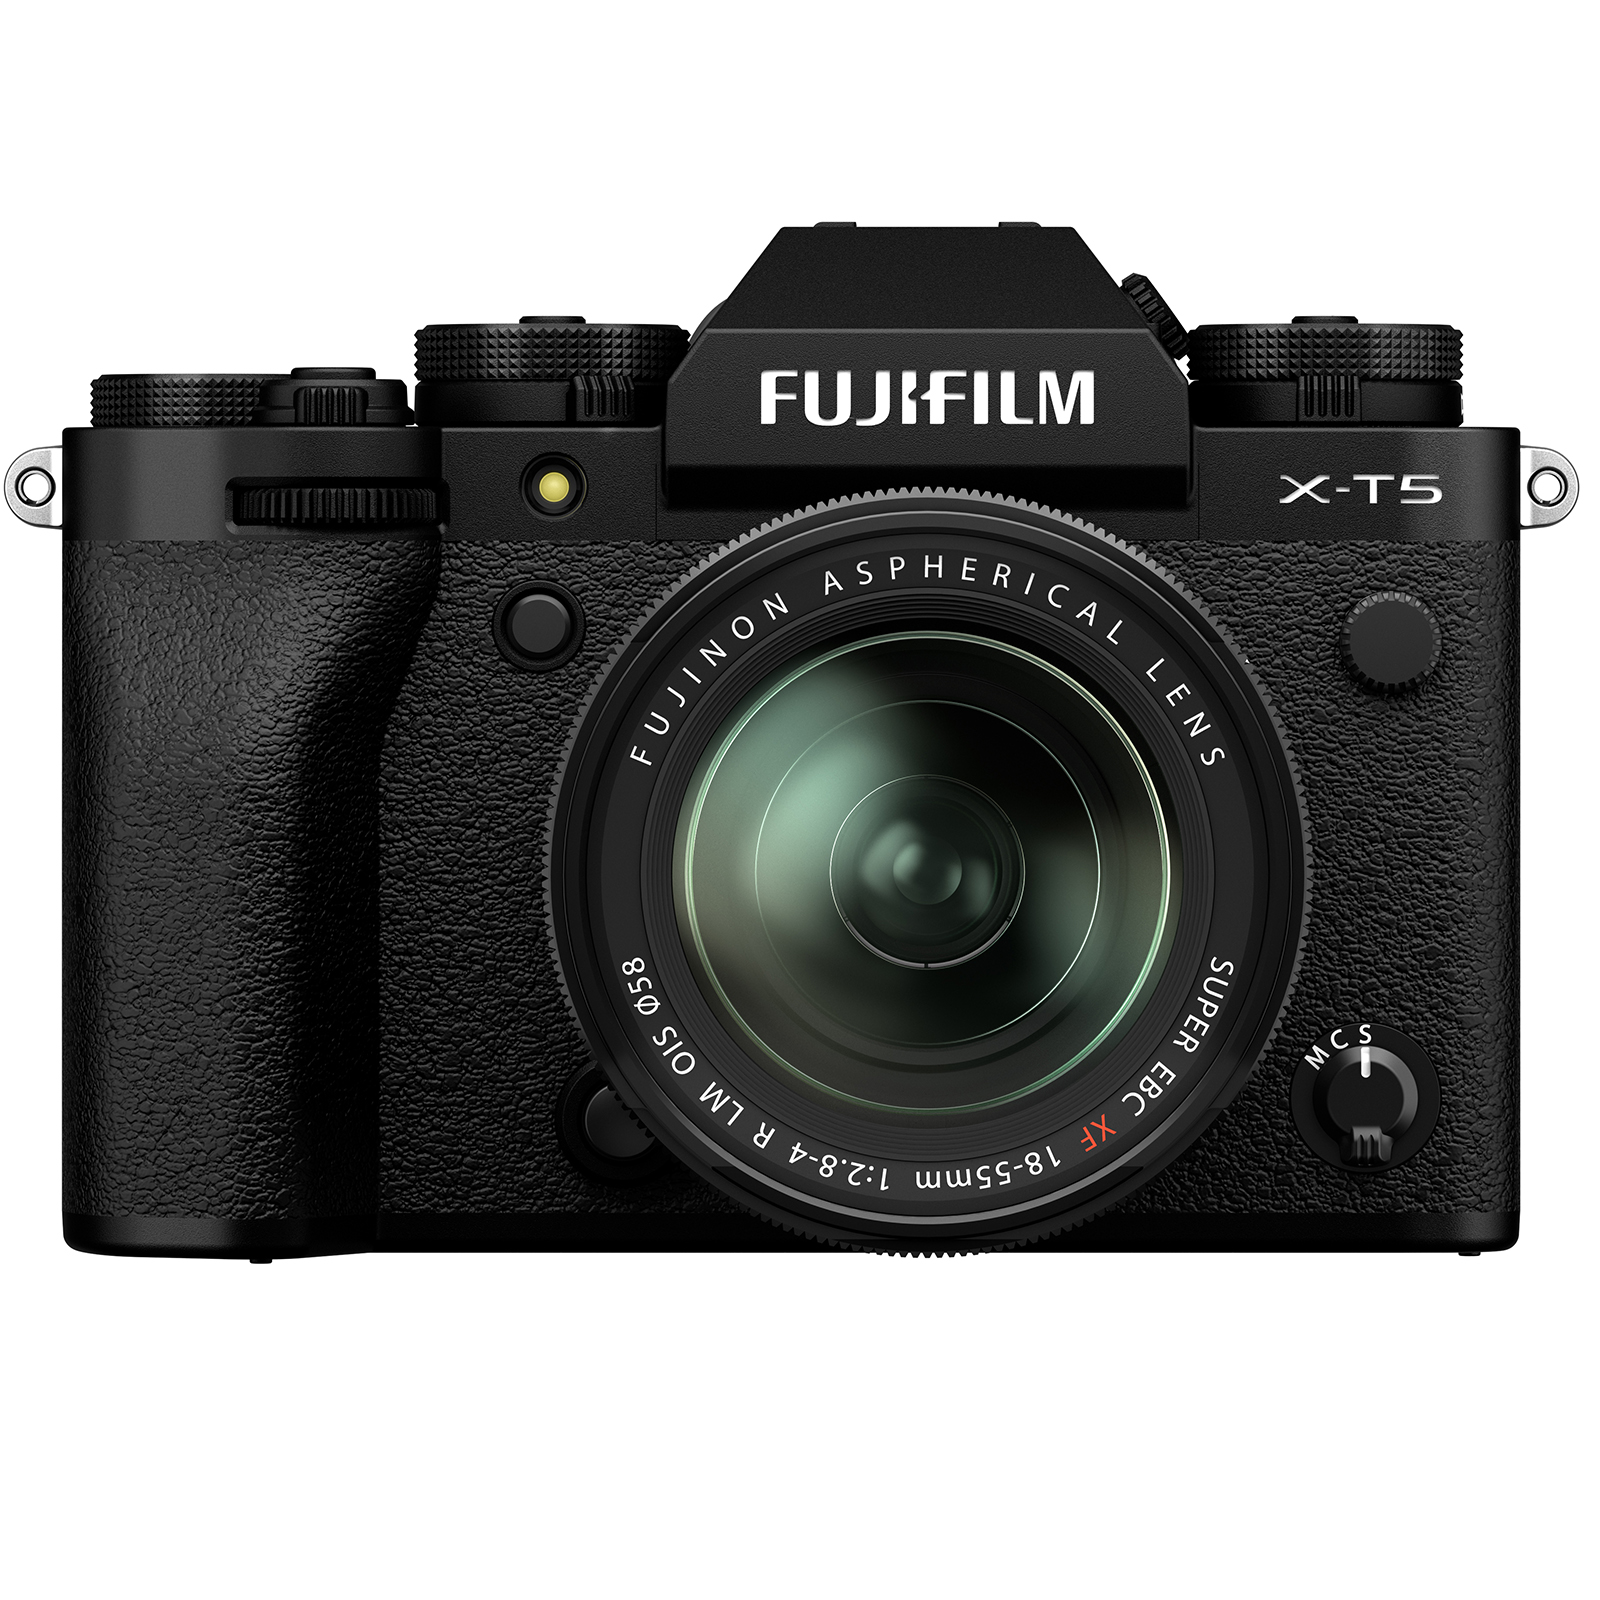 Image of Fujifilm XT5 Digital Camera with XF 1855mm Lens Black